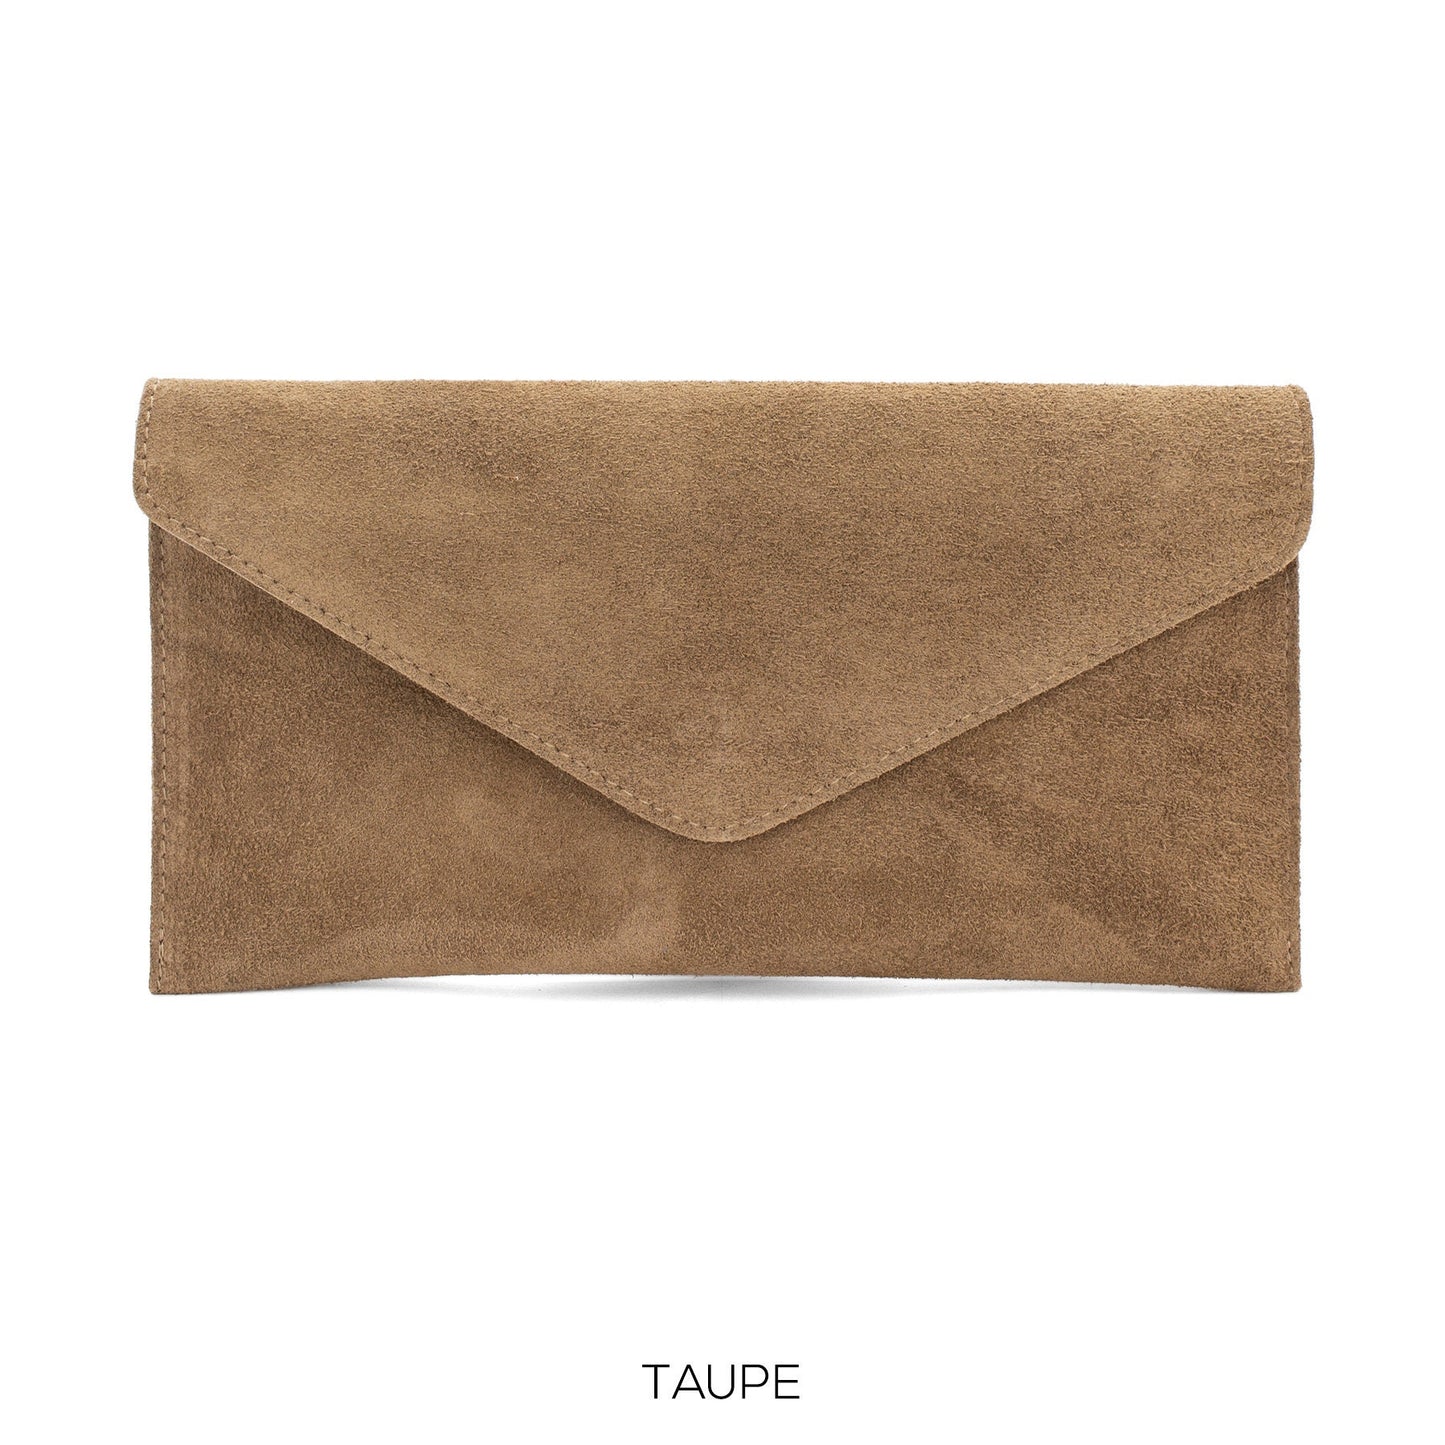 Taupe Suede Envelope Clutch Bag